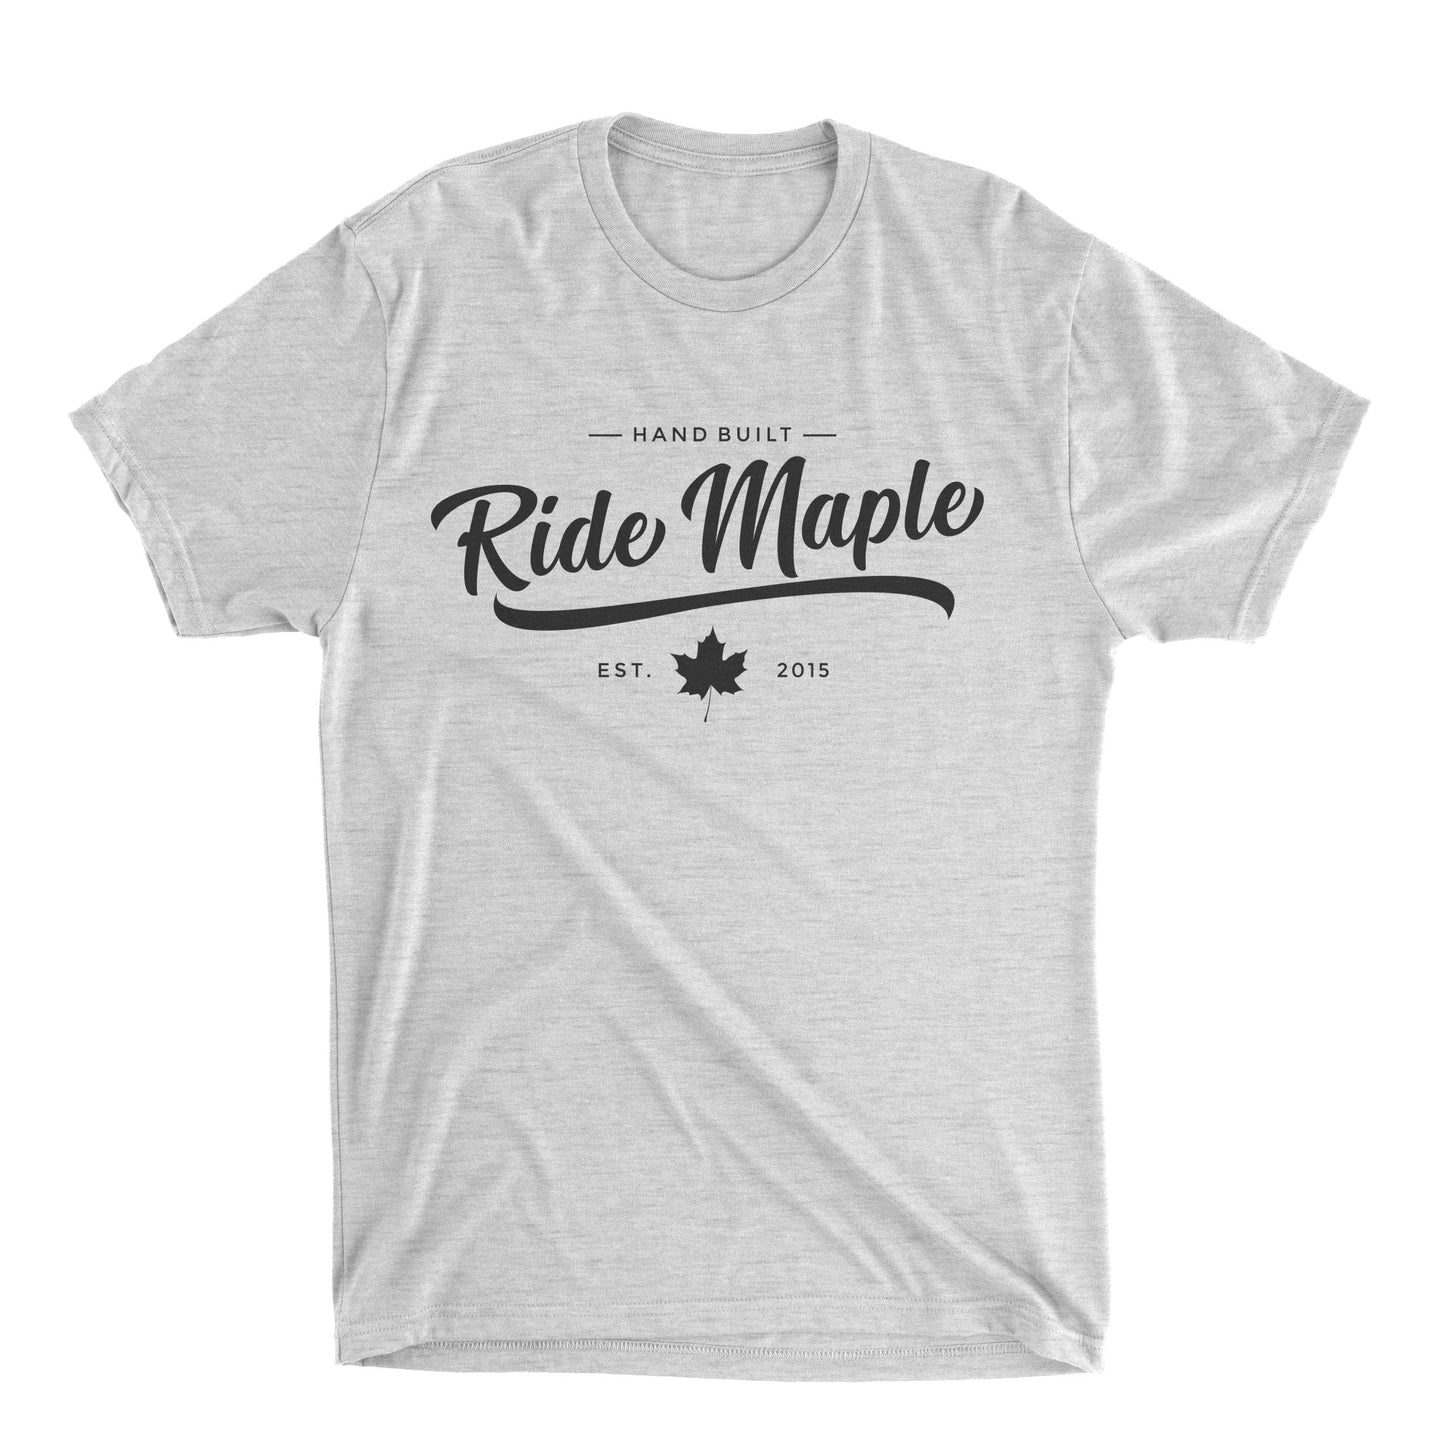 Ride Maple Classy Tee Black Ink - Ride Maple